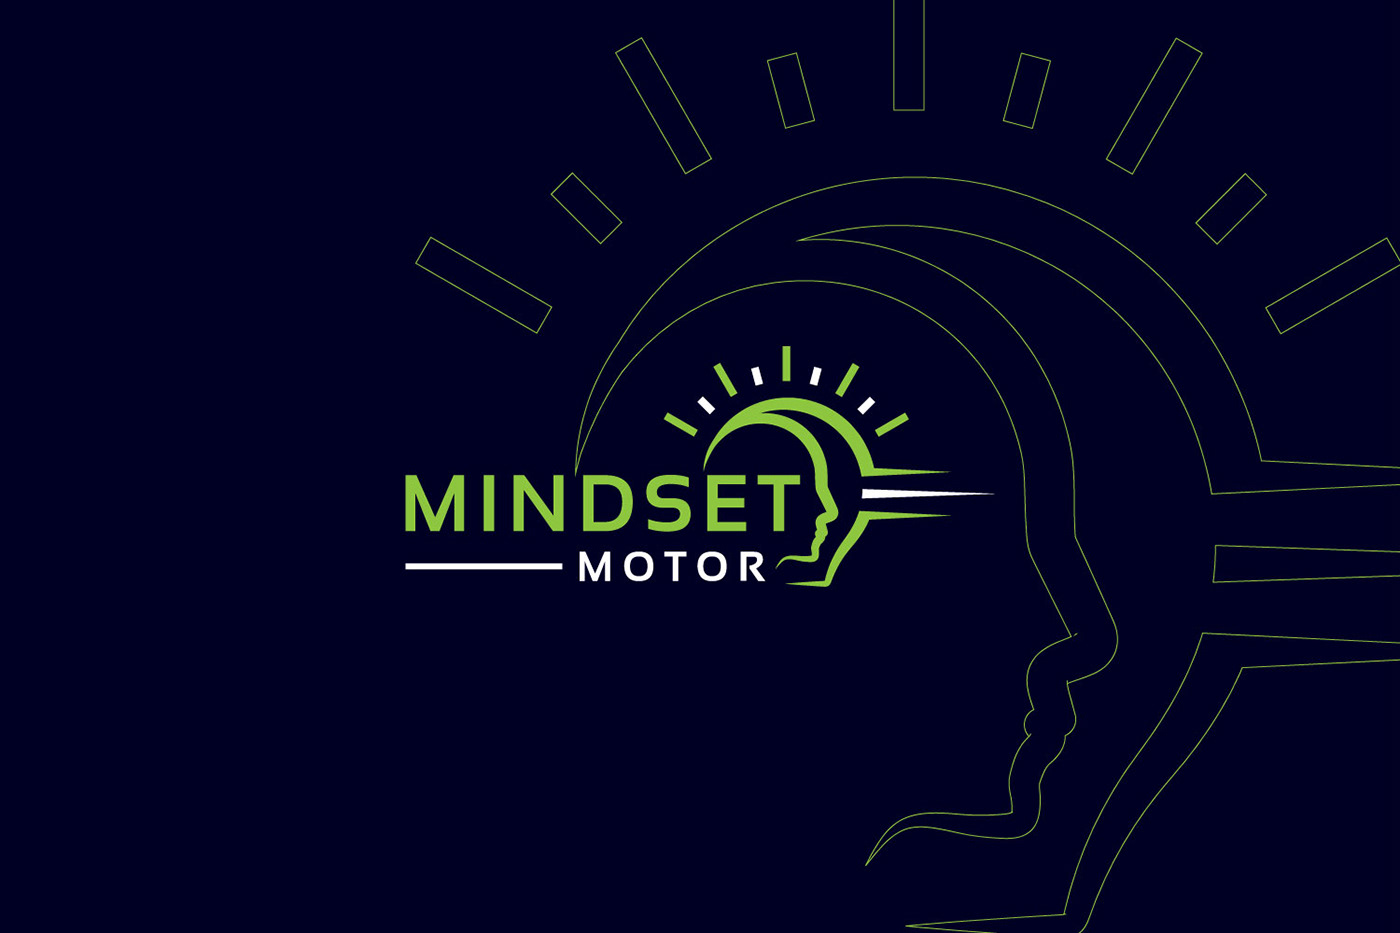 Innovation logo motivation logo inspire logo motivate logo